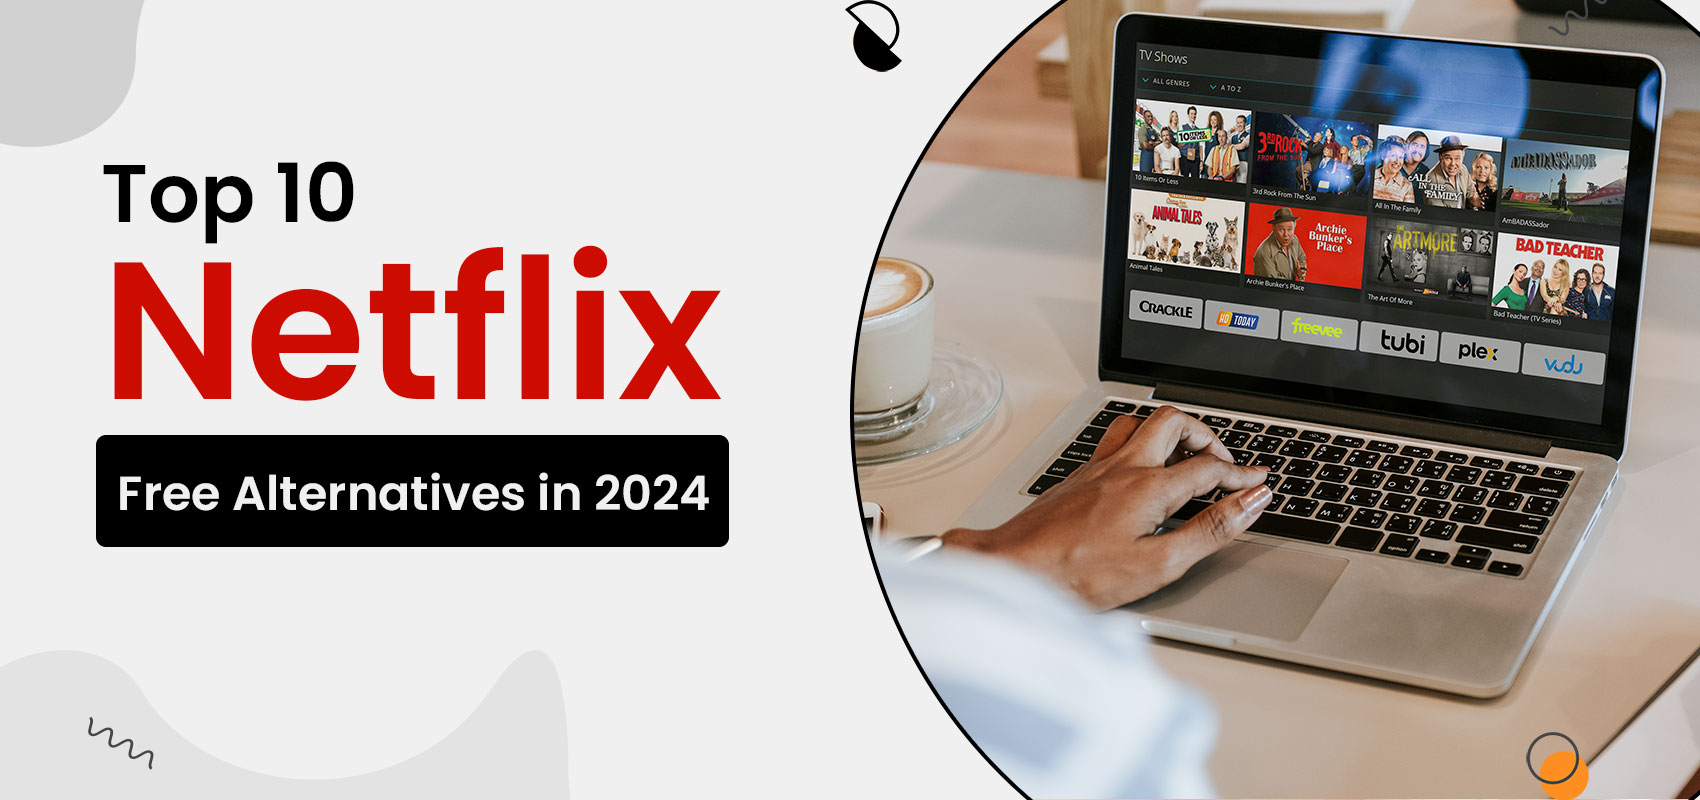 Top 10 Free Netflix Alternatives in 2024: Watch Netflix series for free